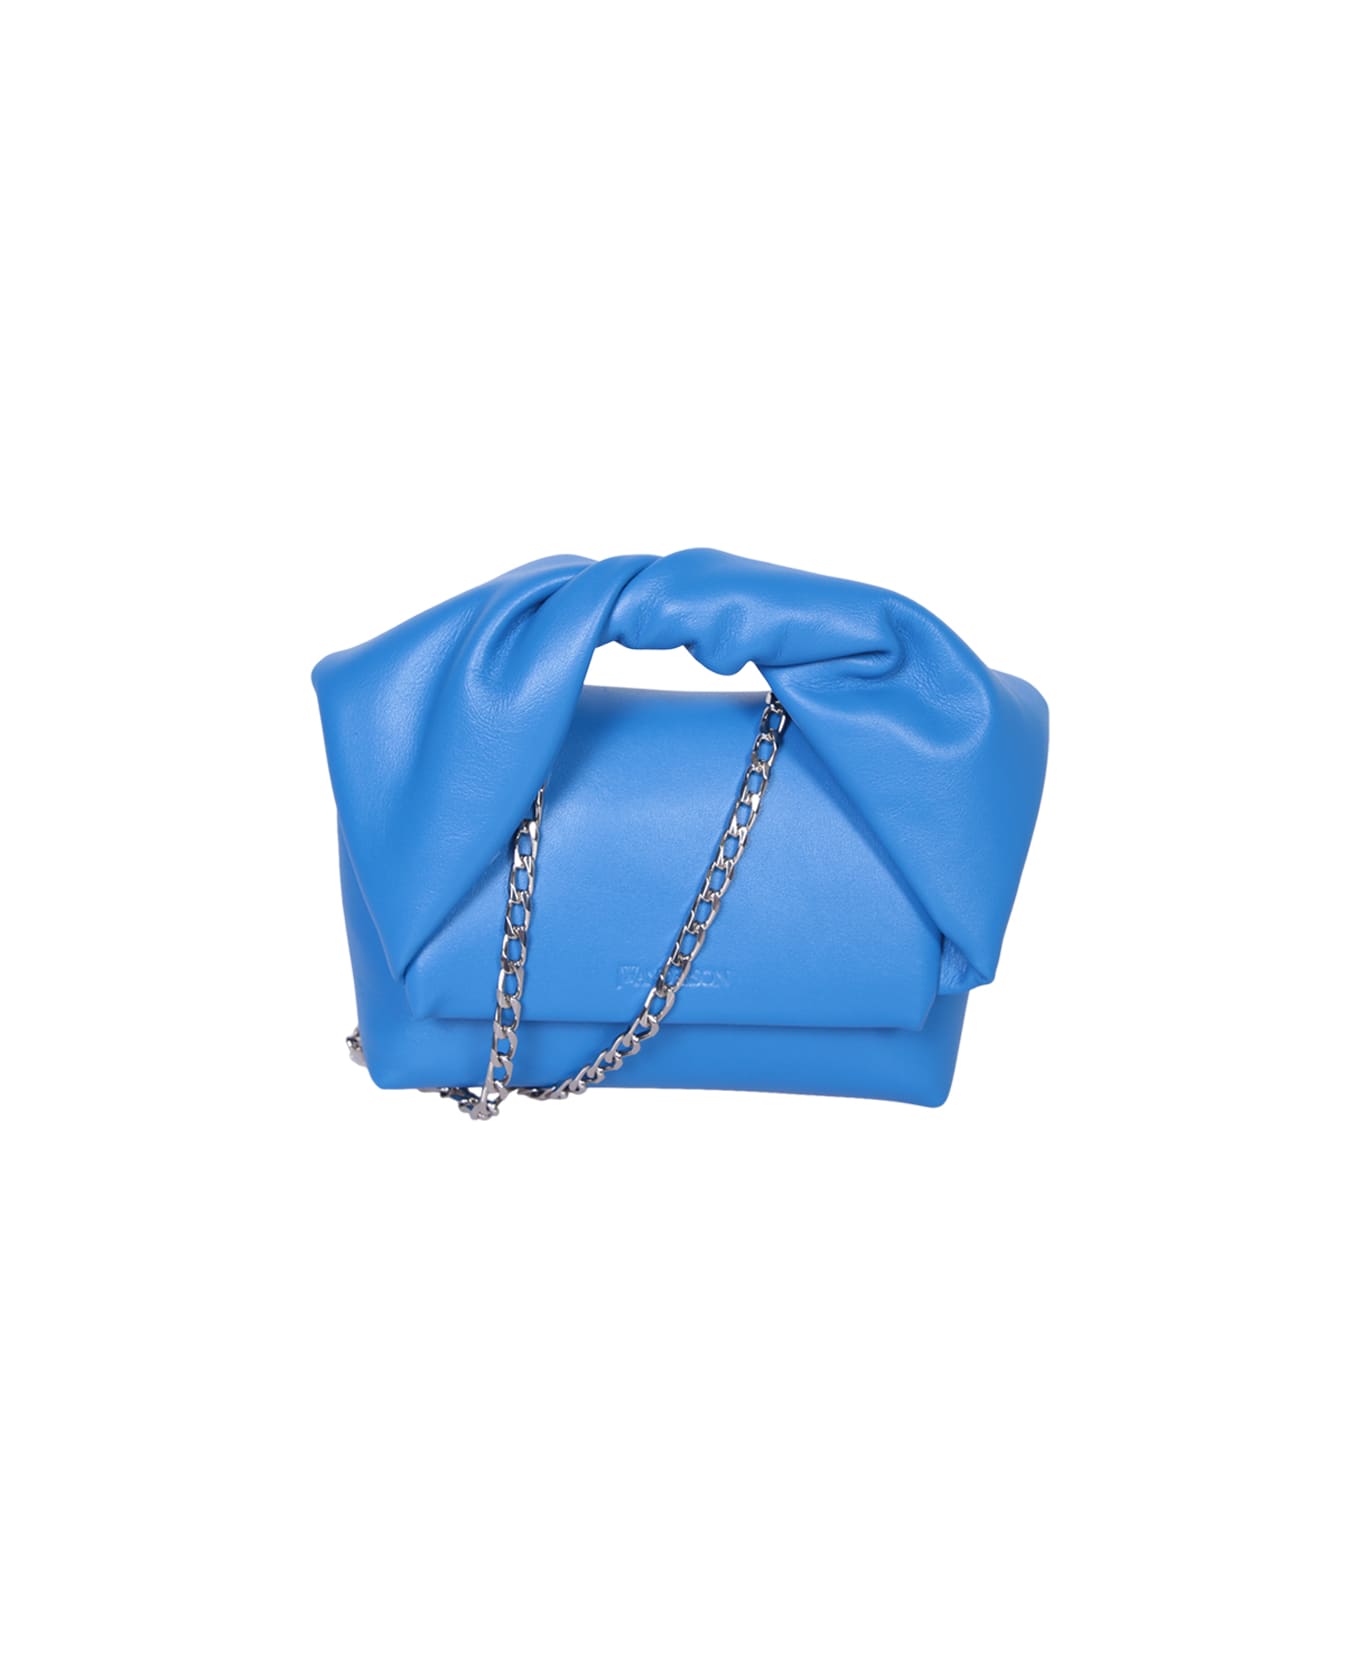 J.W. Anderson Blue Leather Bag - Blue